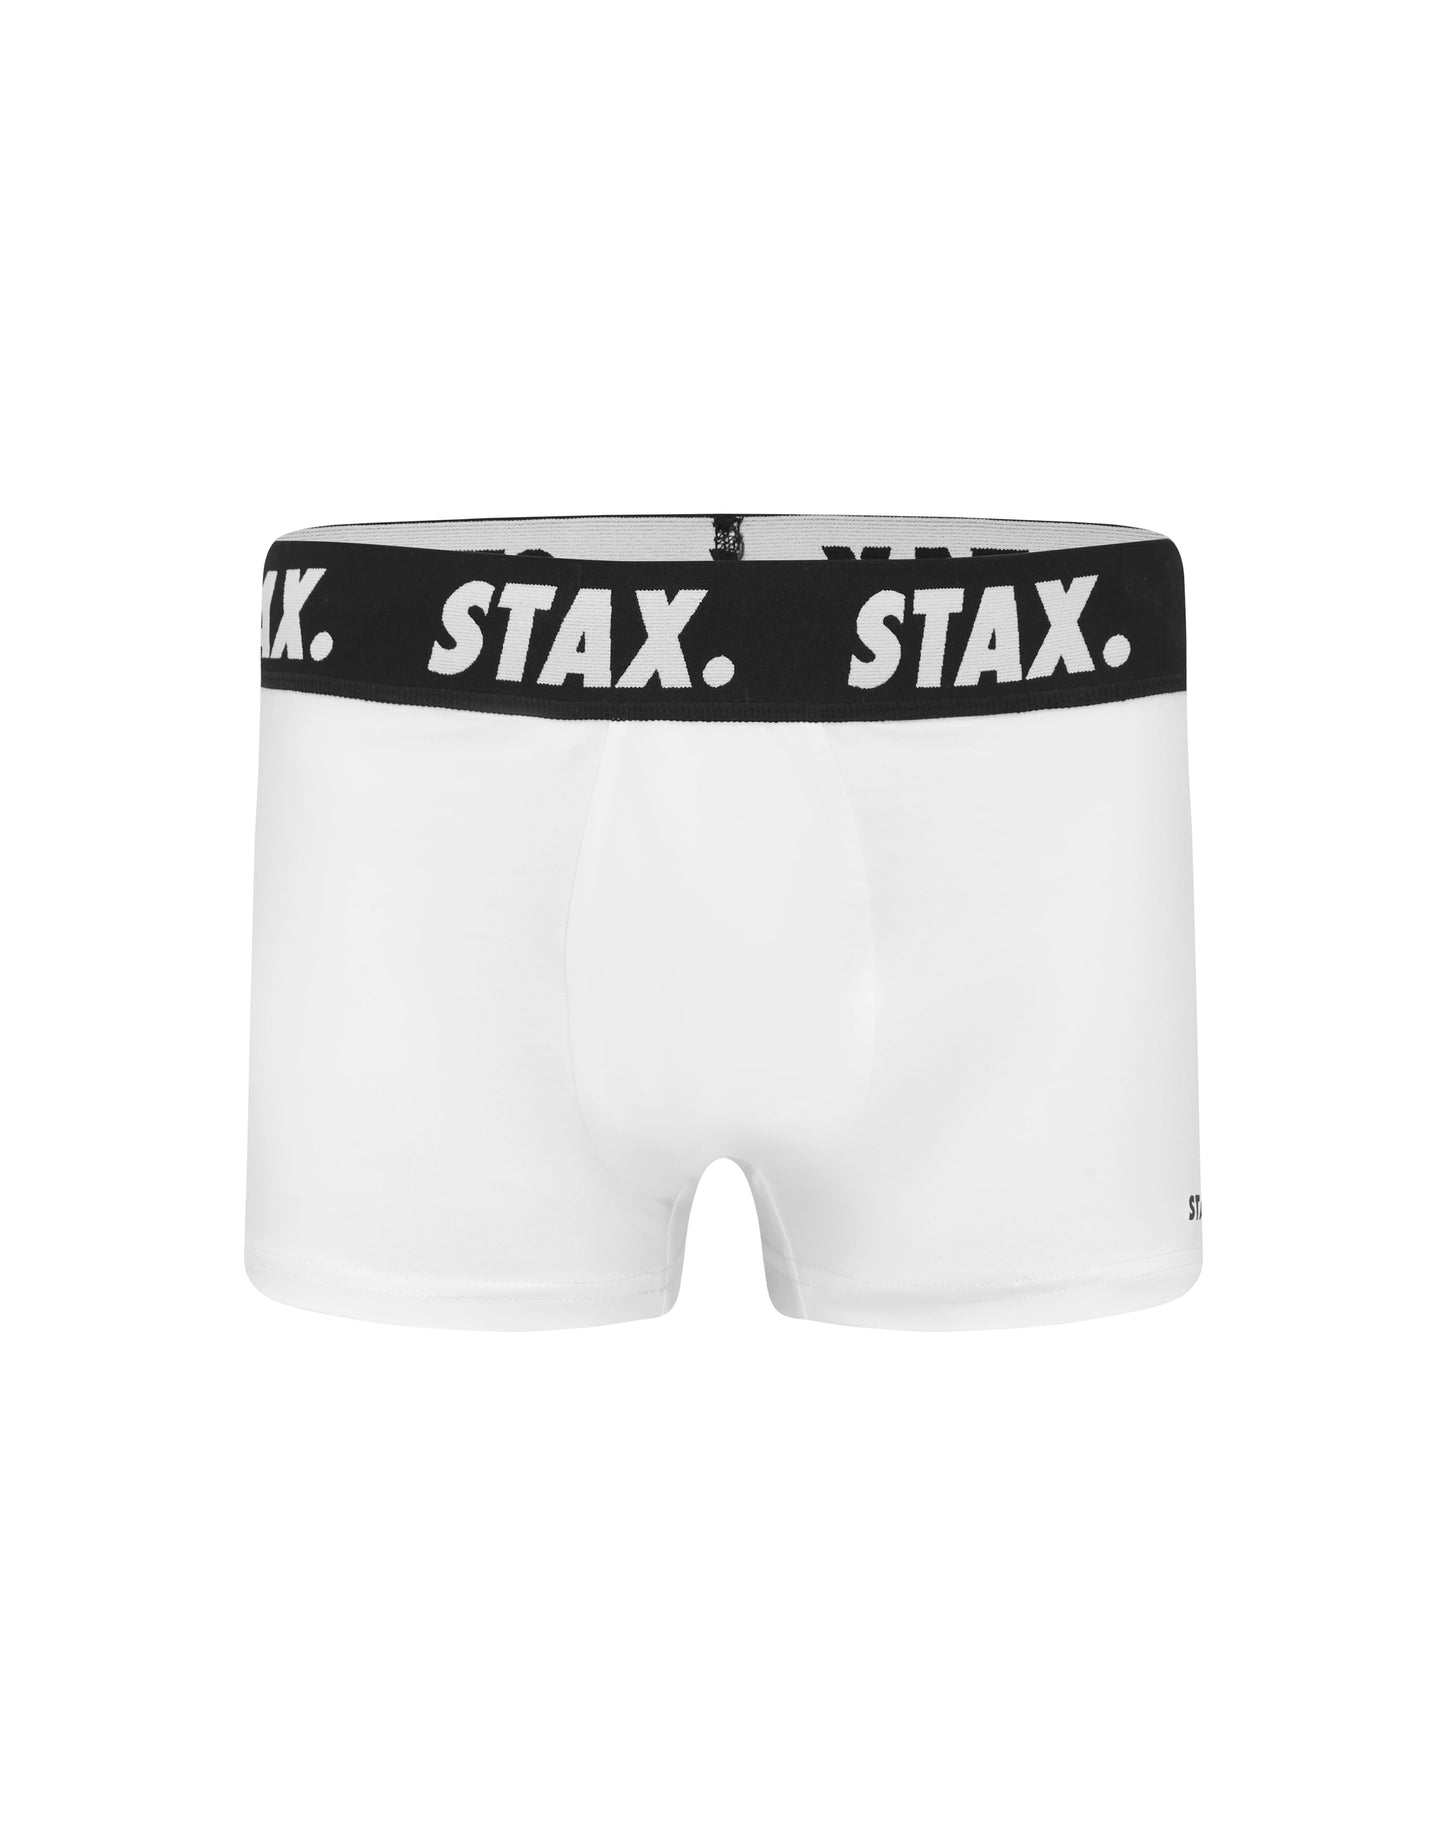 STAX. Mens Jocks - White